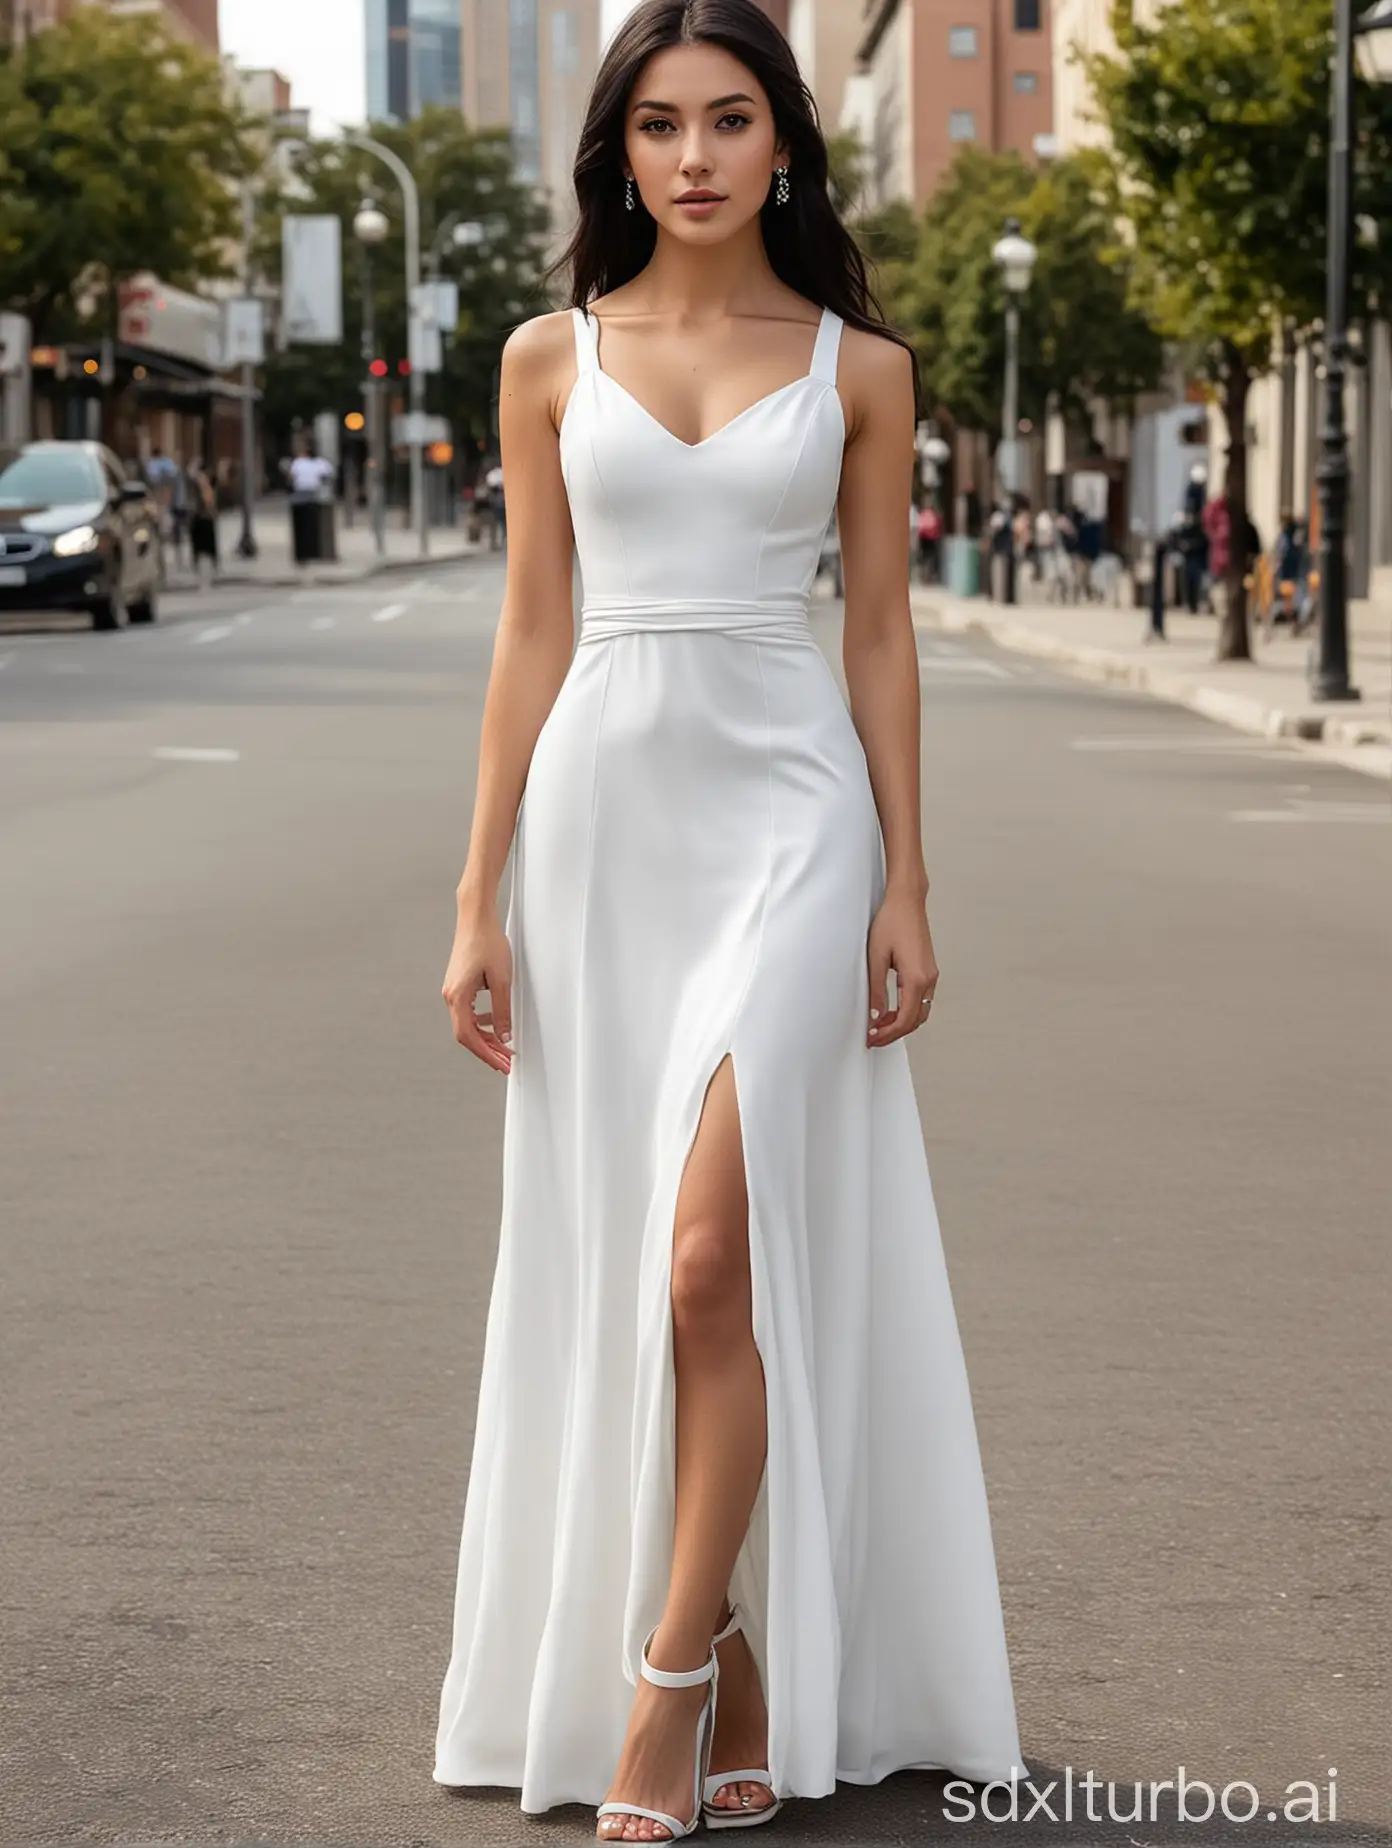 Elegant-Urban-Fashion-BlackEyed-Beauty-in-White-Dress-and-High-Heels